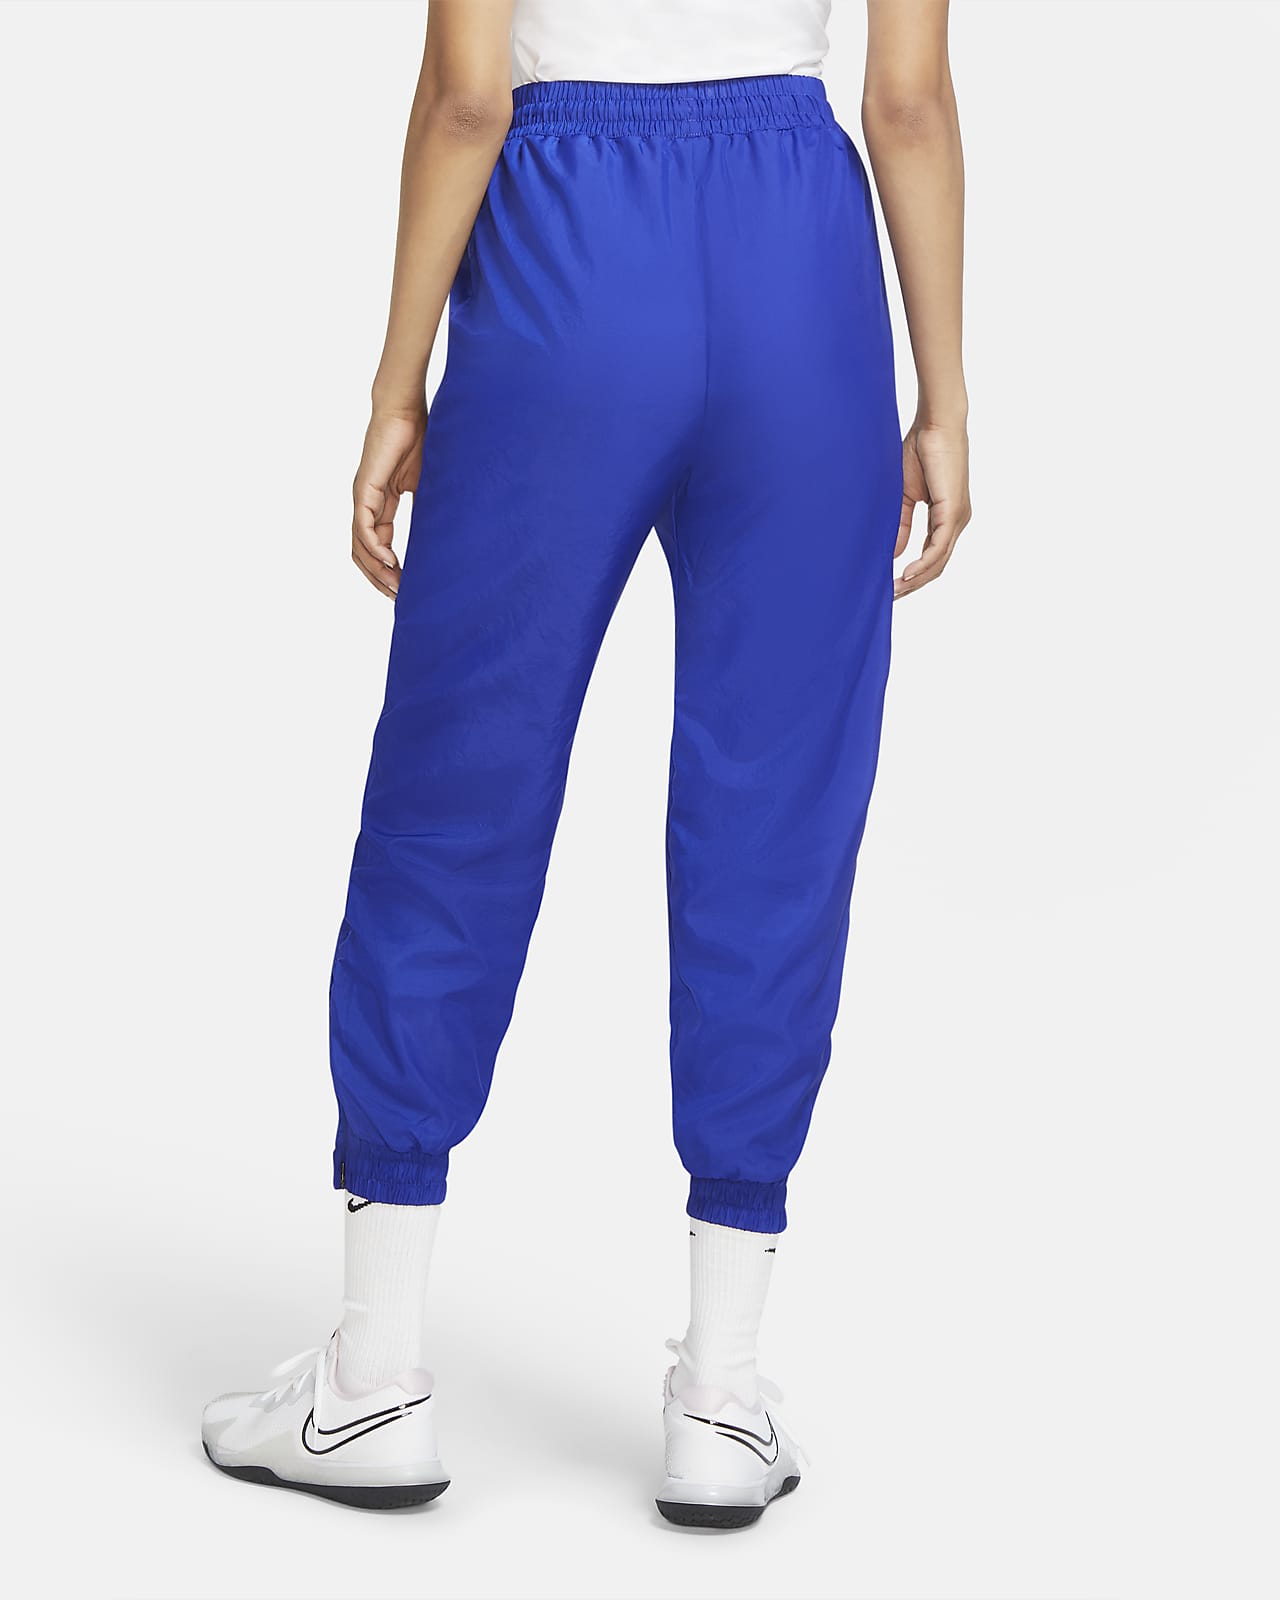 Pantalones de mujer Nike.com